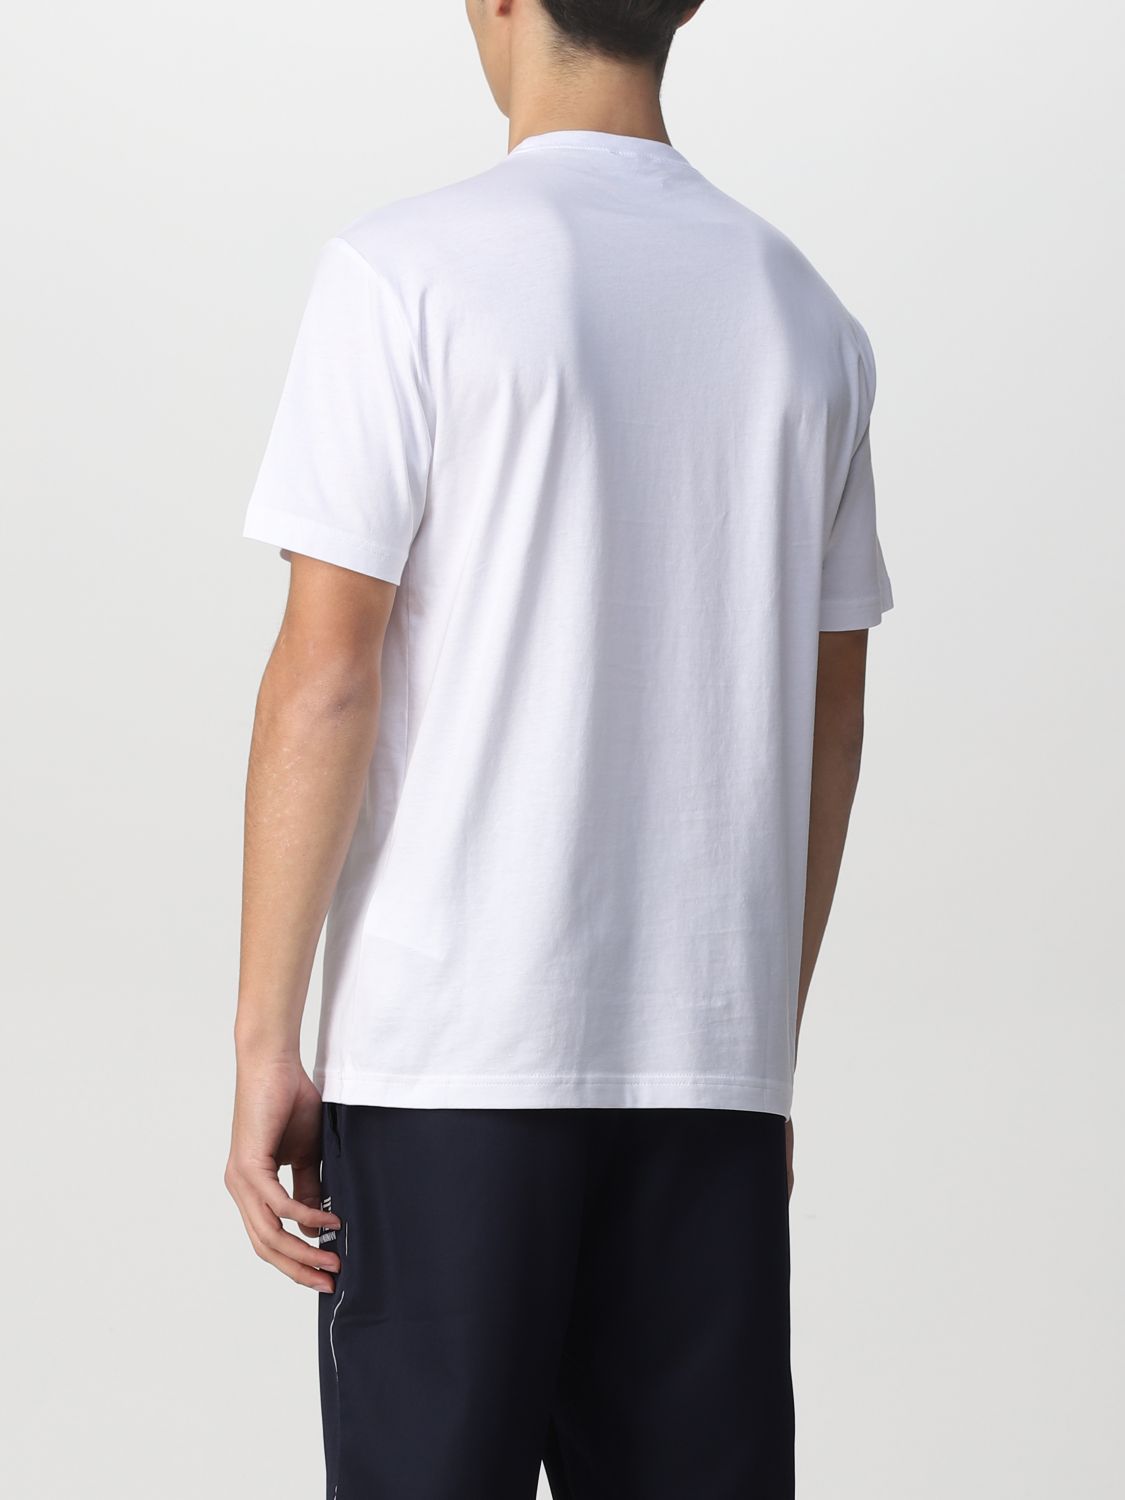 EA7: Basic t-shirt with logo - White | Ea7 t-shirt 3LPT28PJ02Z online ...